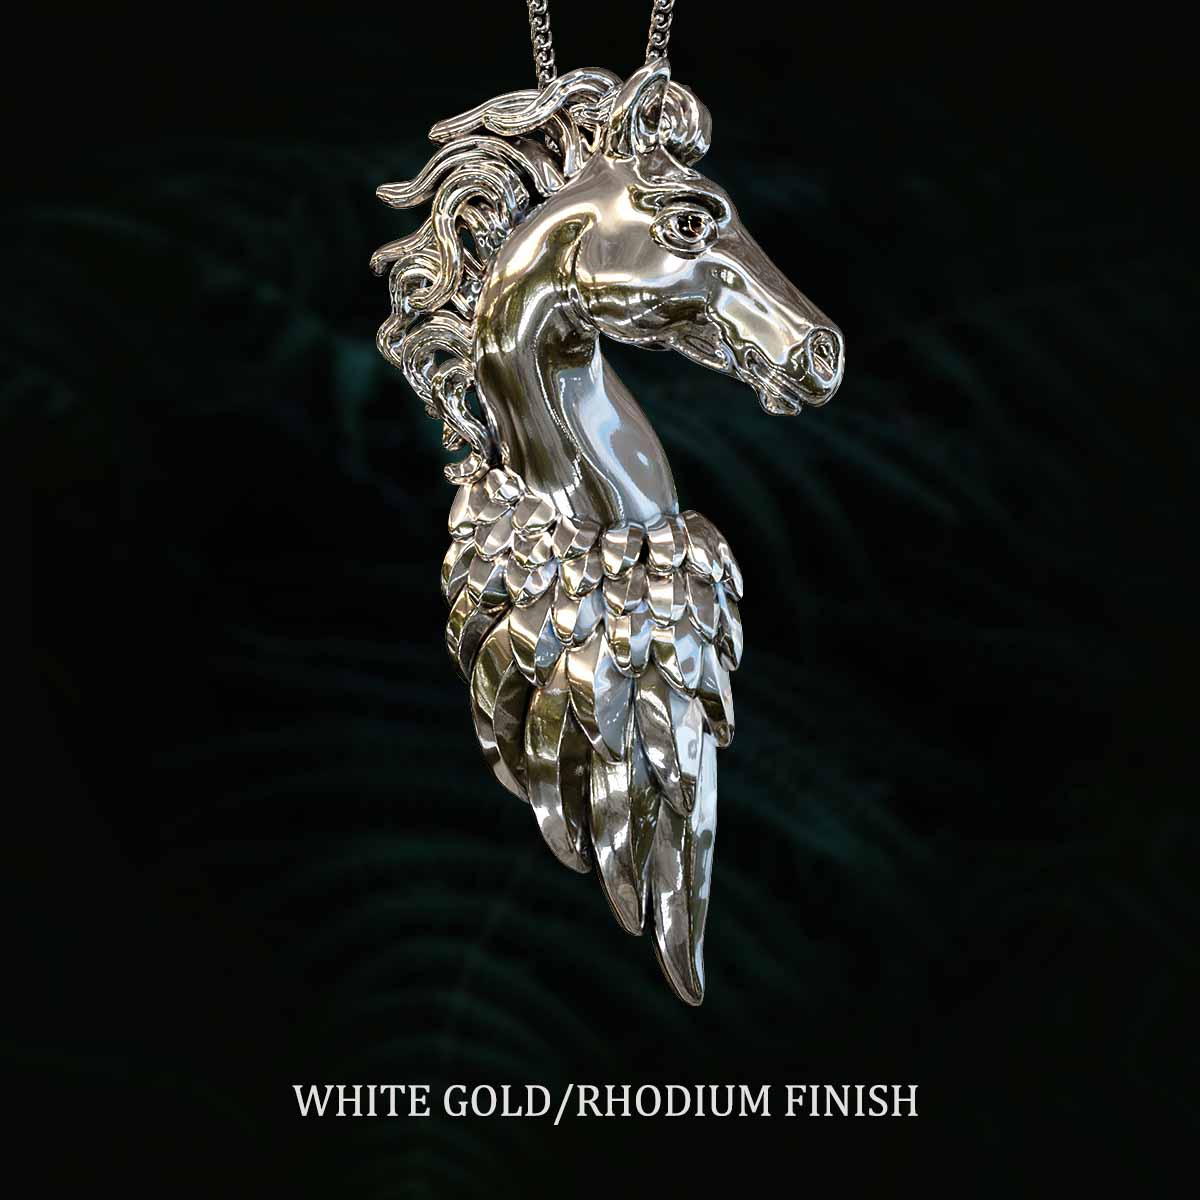     White-Gold-Rhodium-Finish-Pegasus-Pendant-Jewelry-For-Necklace